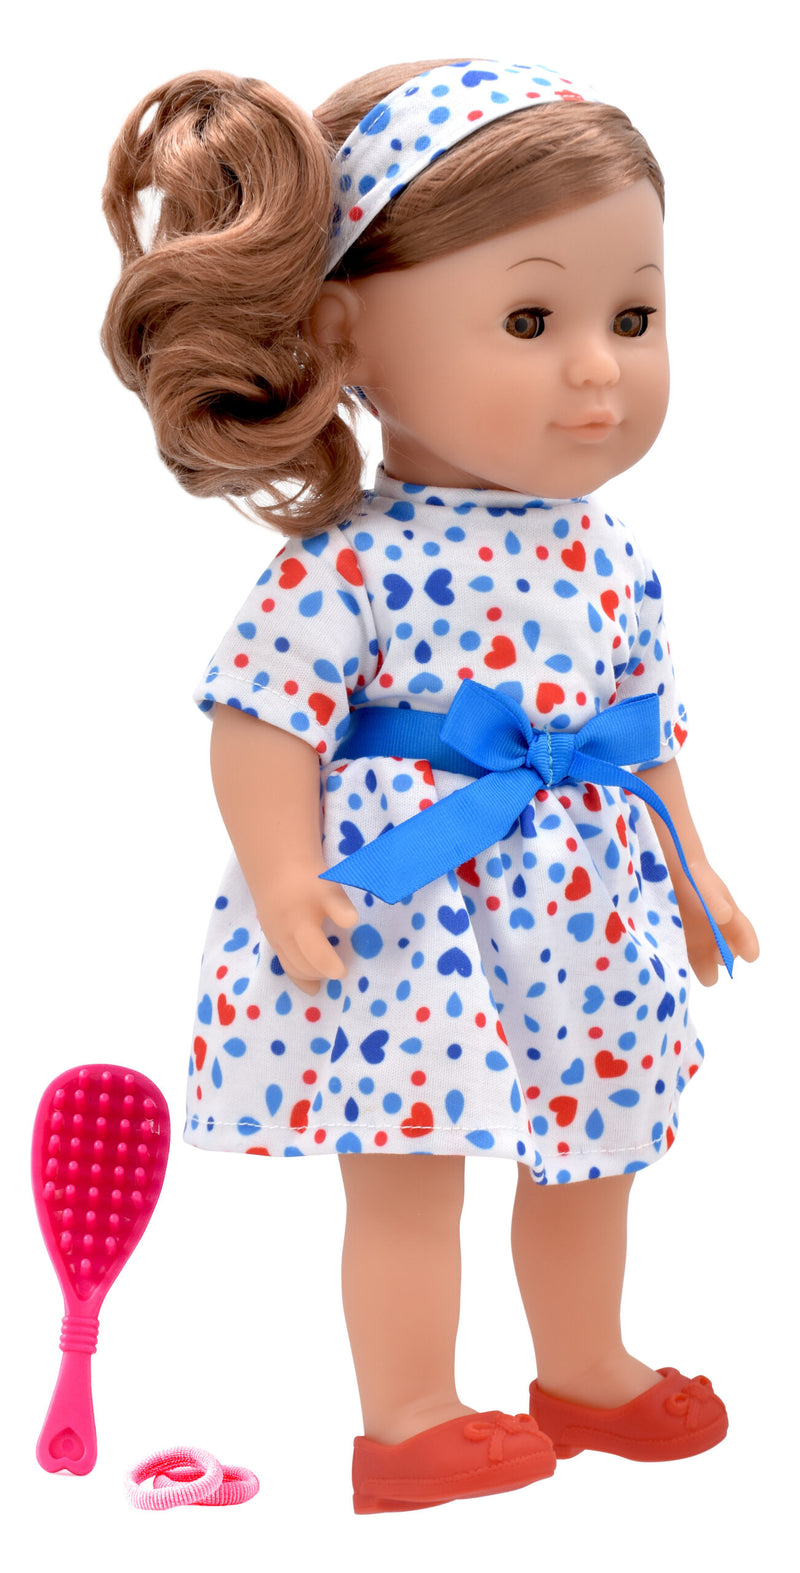 Dollsworld Charlotte Brunette Dolll 36cm (14") with Accessories (7769910837403)